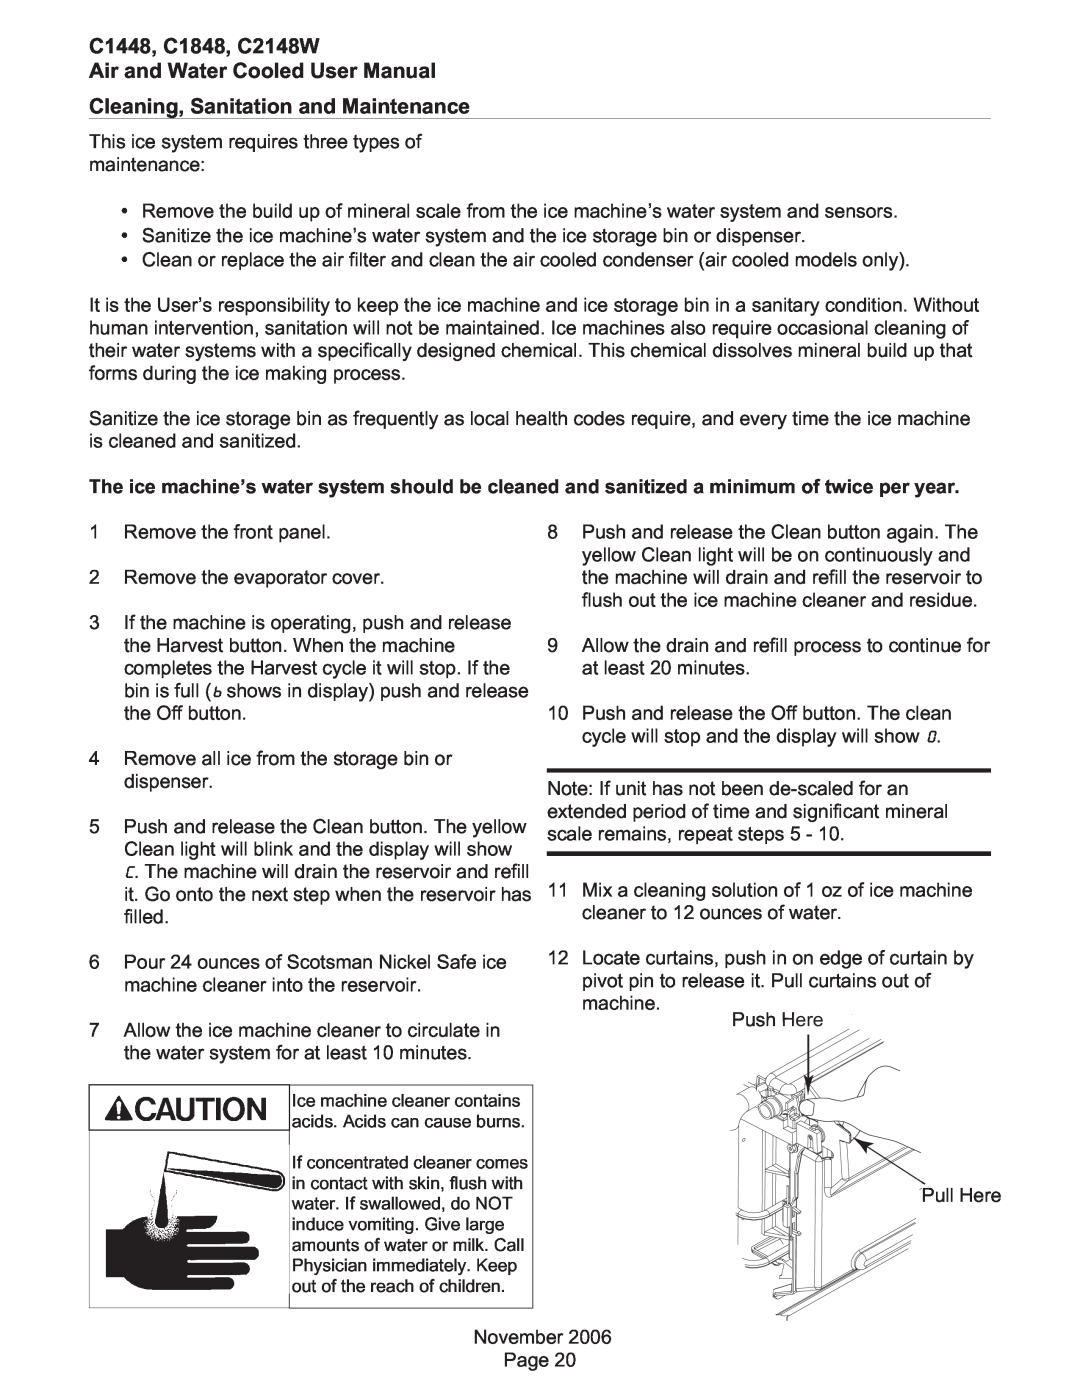 Scotsman Ice user manual Cleaning, Sanitation and Maintenance, C1448, C1848, C2148W 